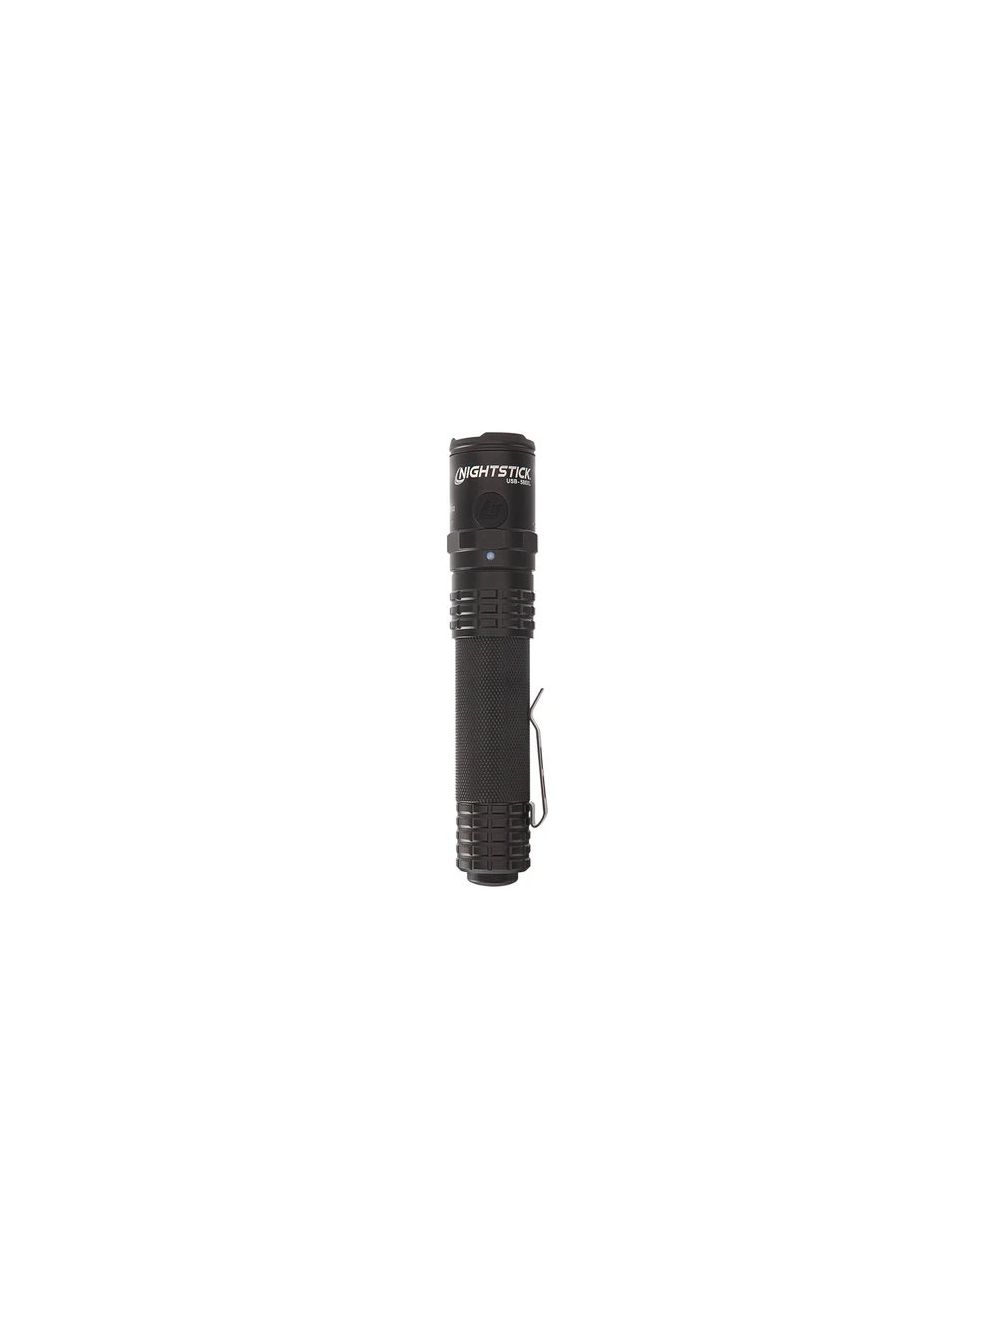 USB Dual-Light Tactical Flashlight - Black